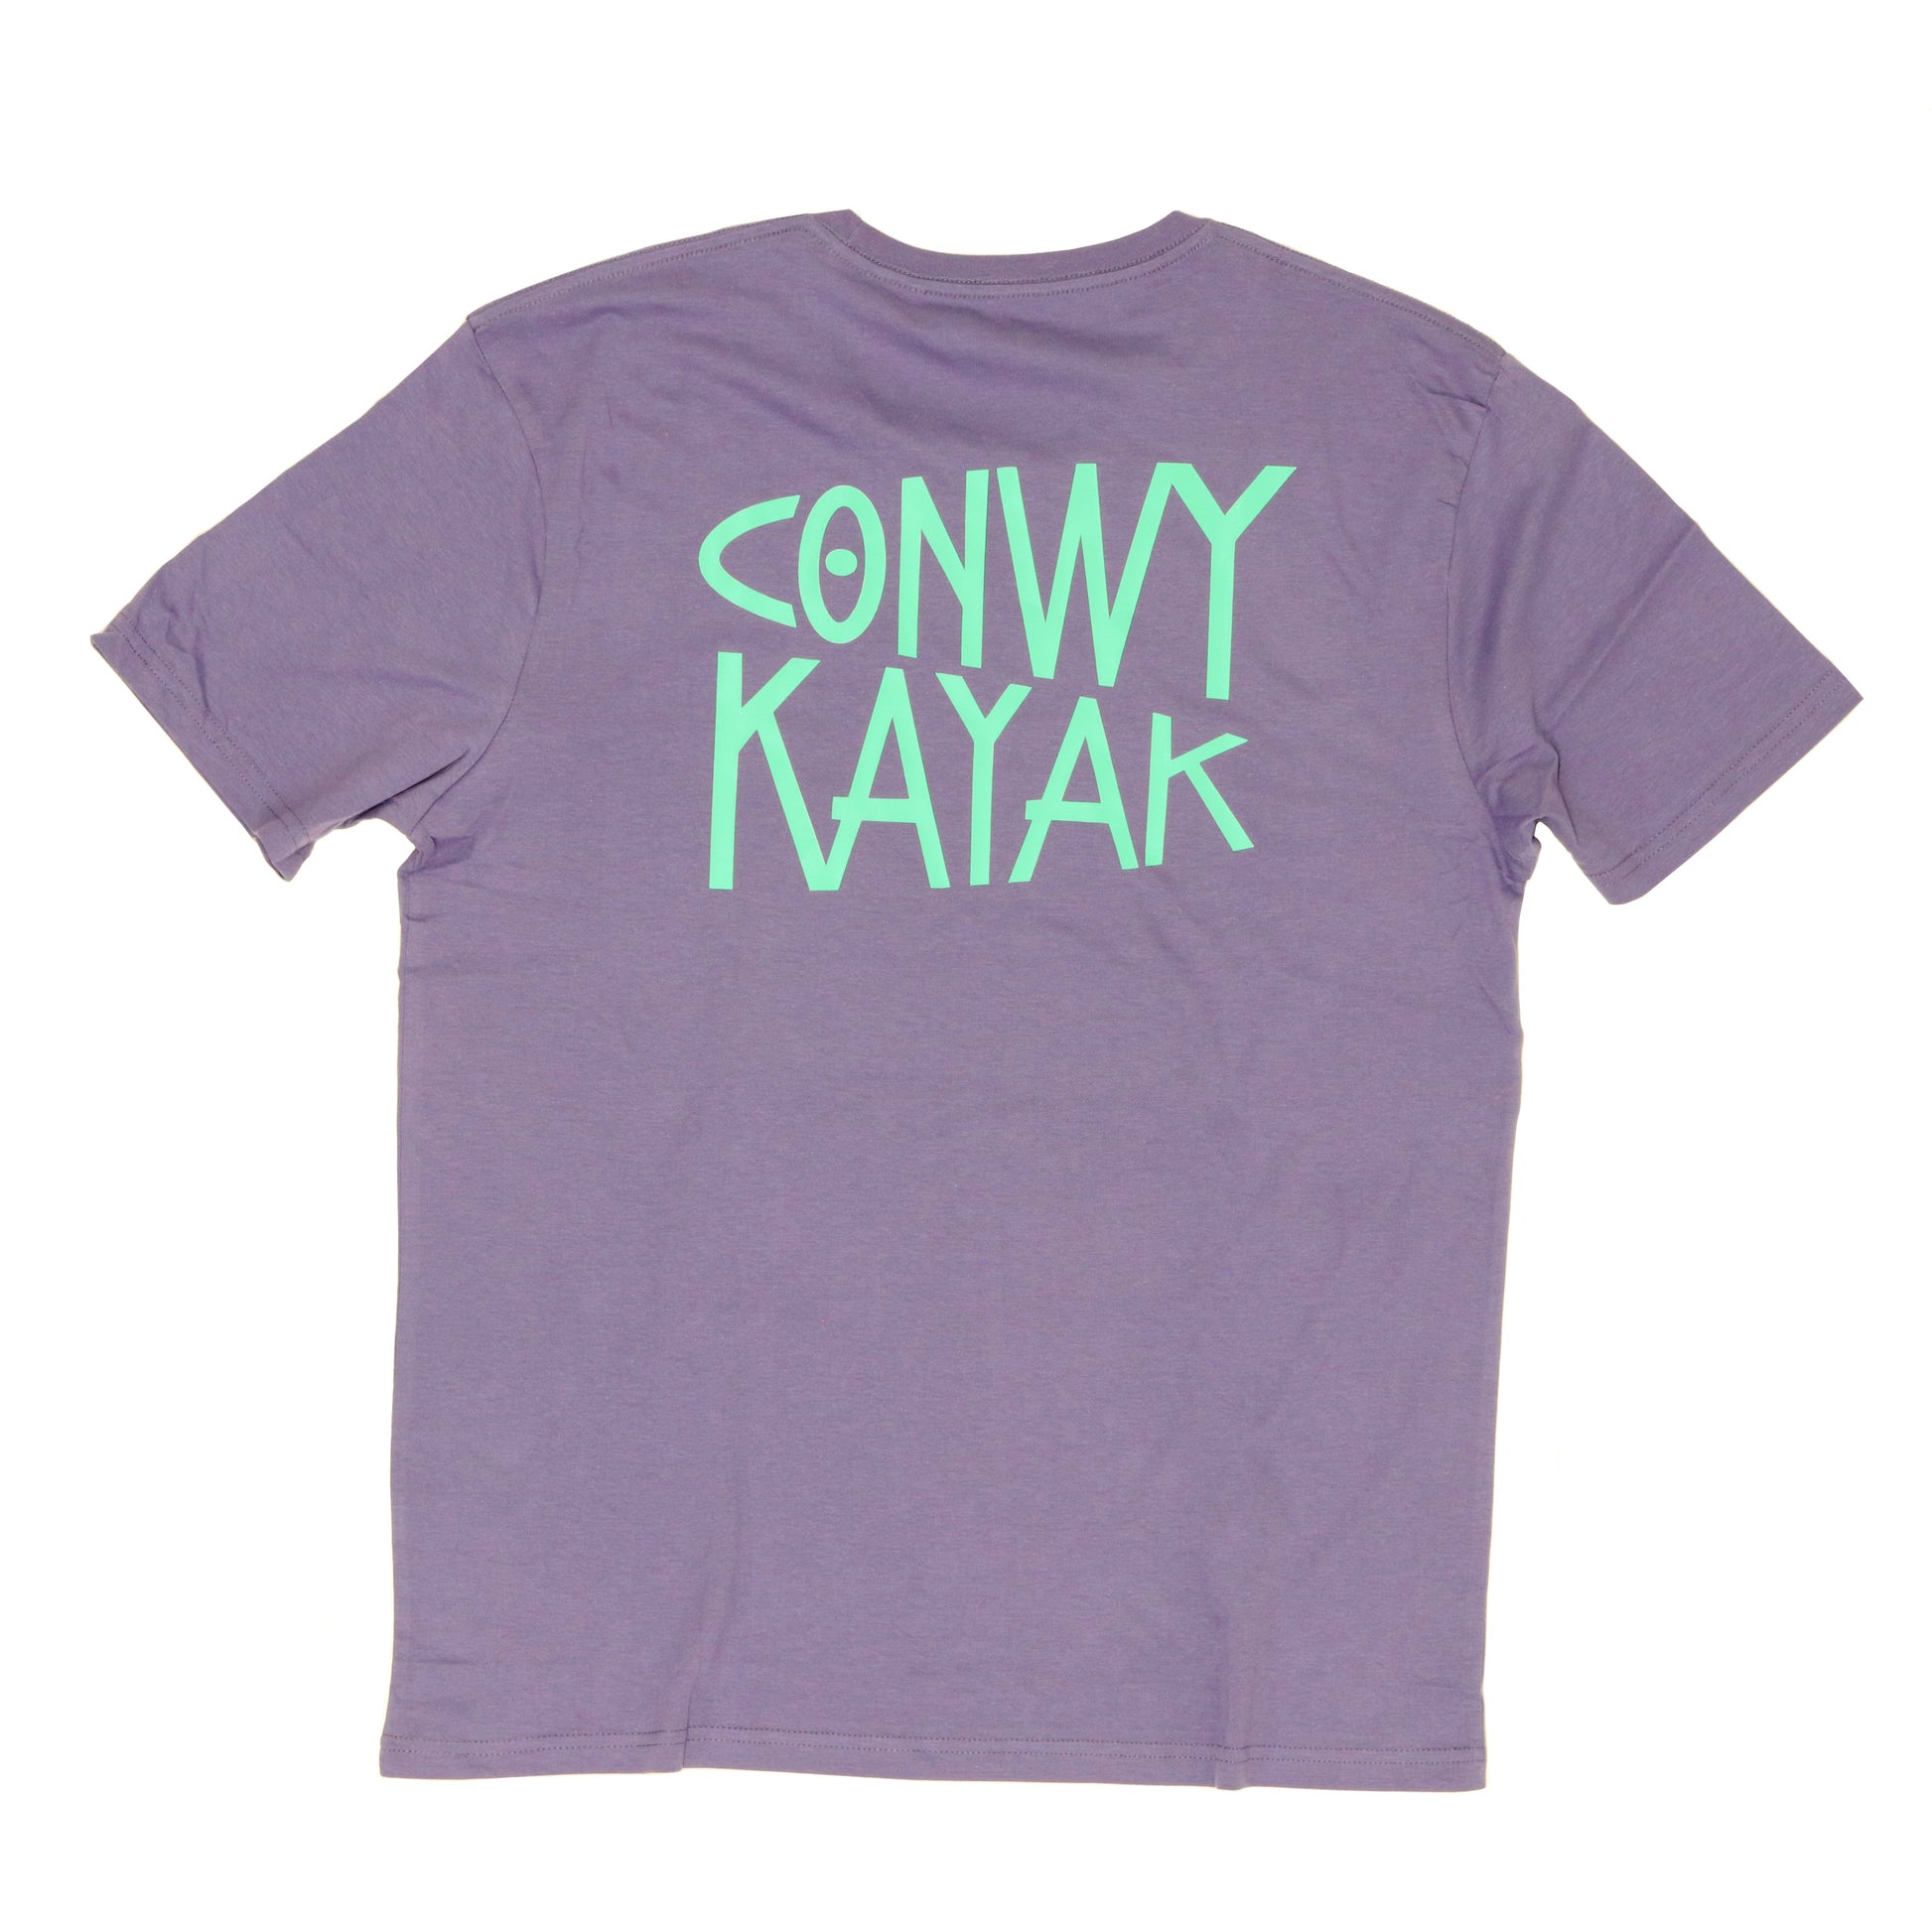 Conwy Kayak - Purple Short Sleeve T-shirt - 1